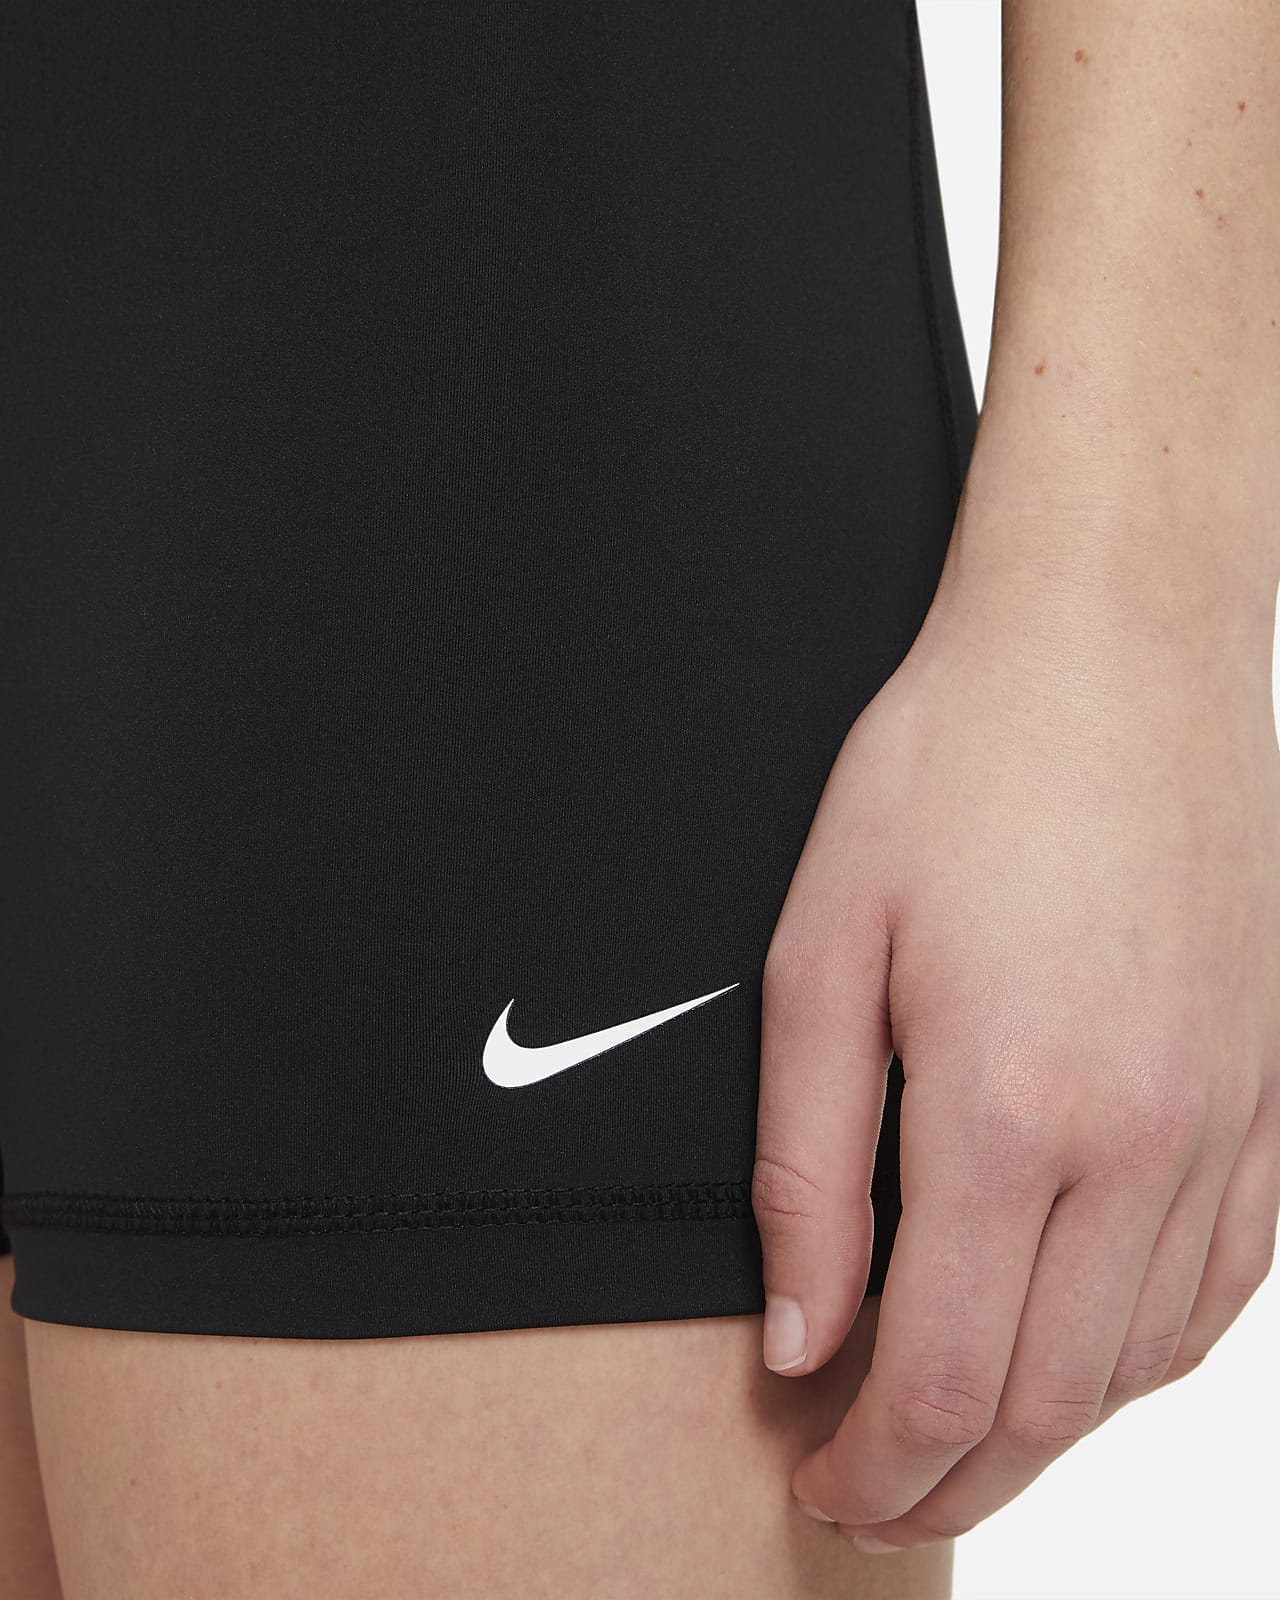 Carry miser vacancy Nike Pro 365 Women's 13cm (approx.) Shorts. Nike NZ